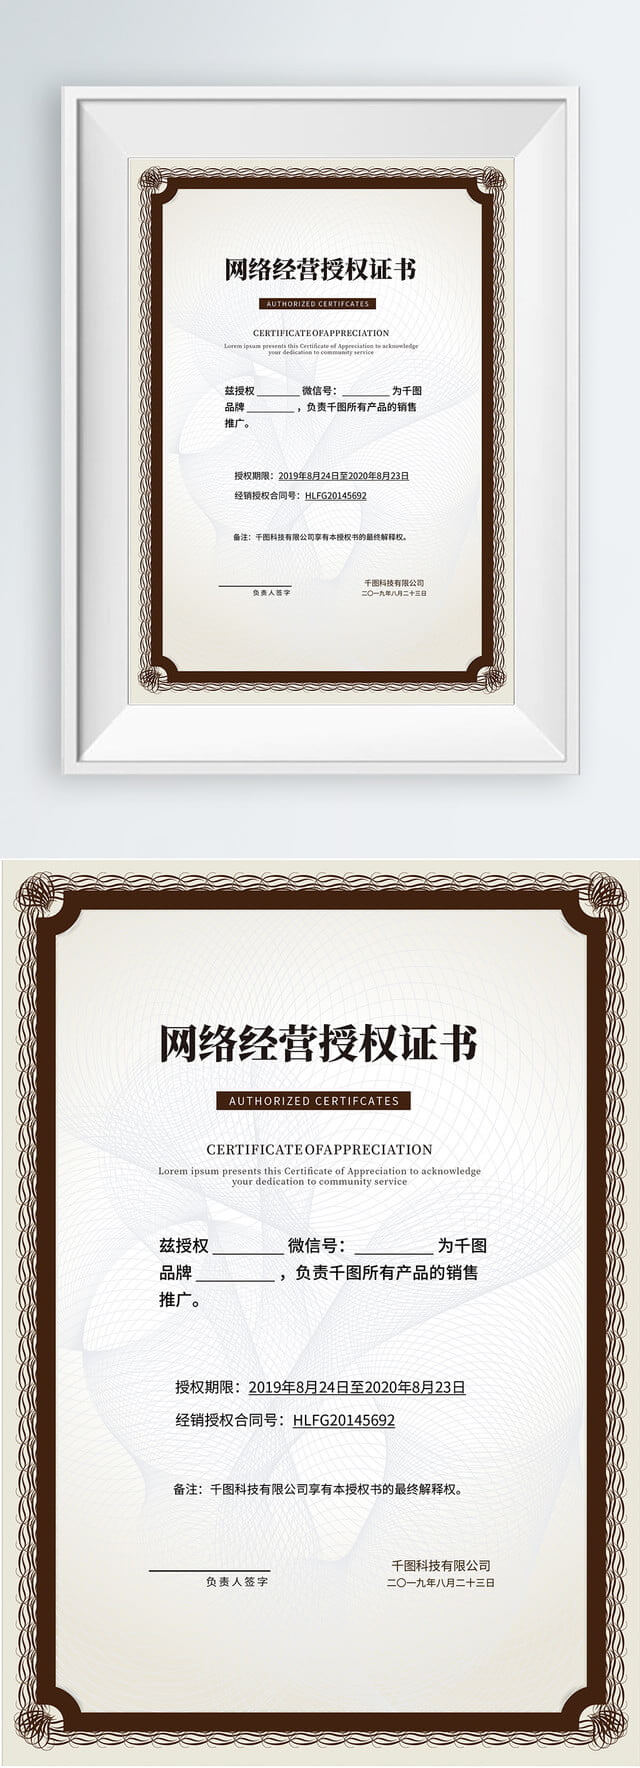 Certificate Authorization Certificate Security Certificate Intended For Present Certificate Templates